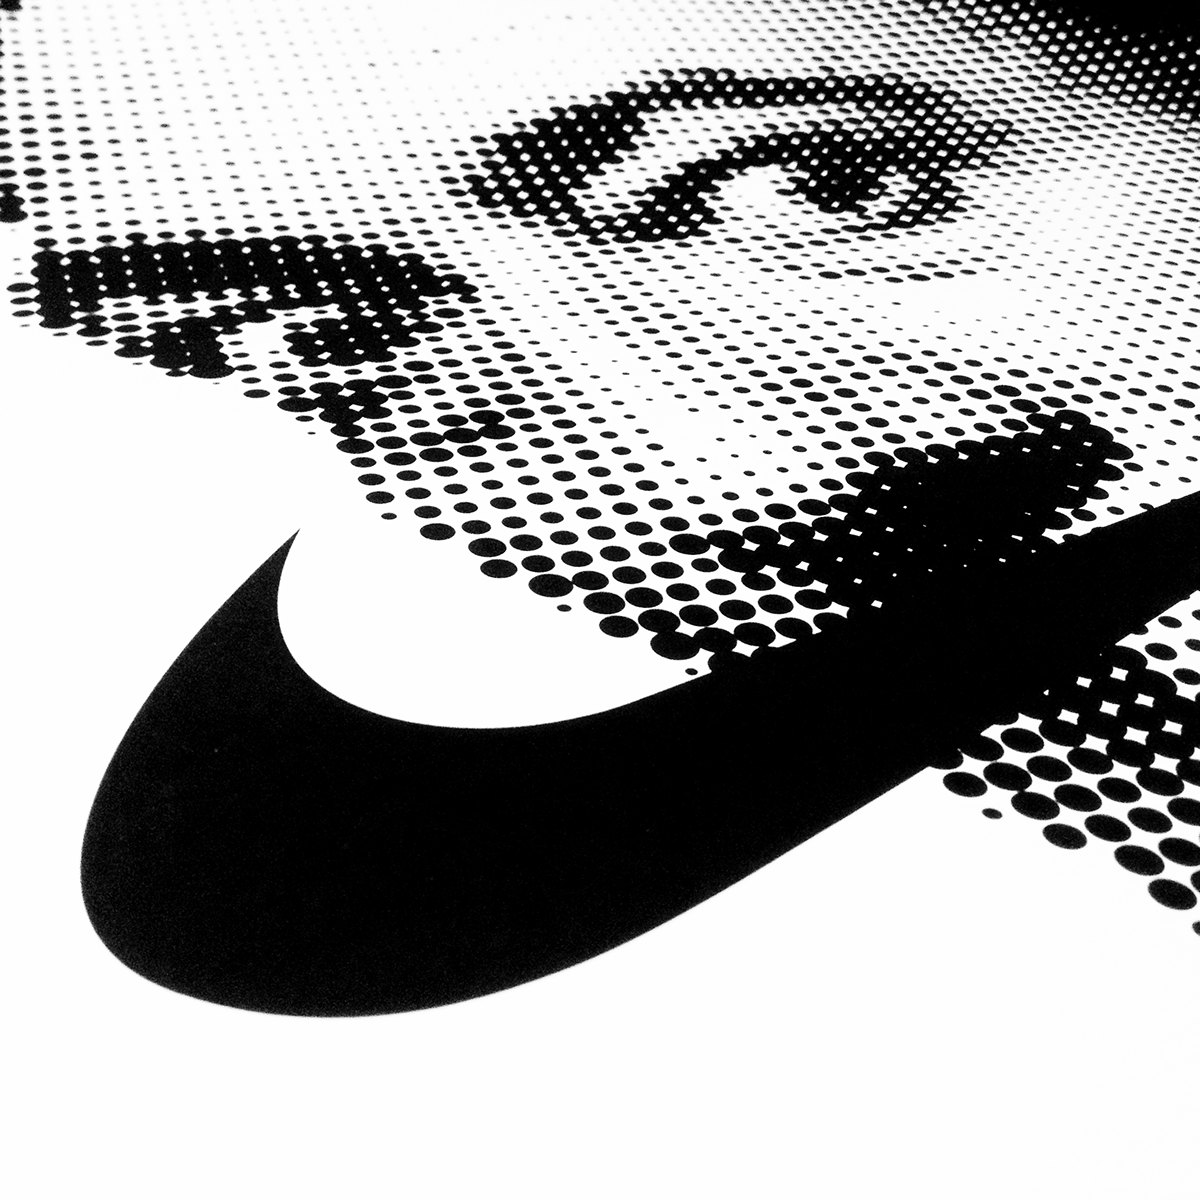 moustache nhe bigote Nike salvador dali surrealism poster justo to it just diseño design big cartel disseny barcelona poesia